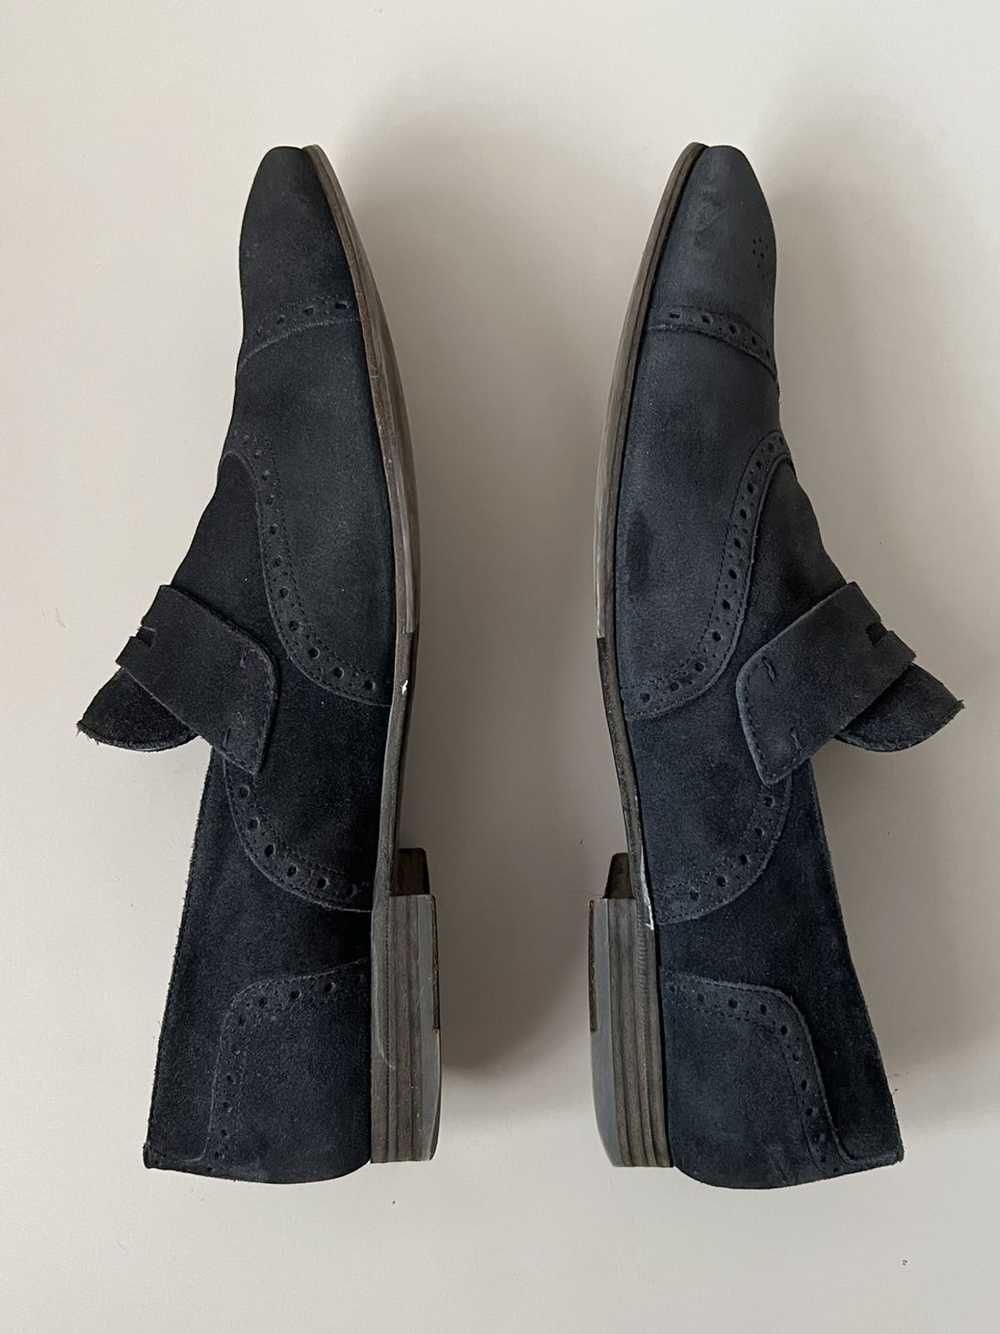 Yves Saint Laurent YSL suede shoes - image 2